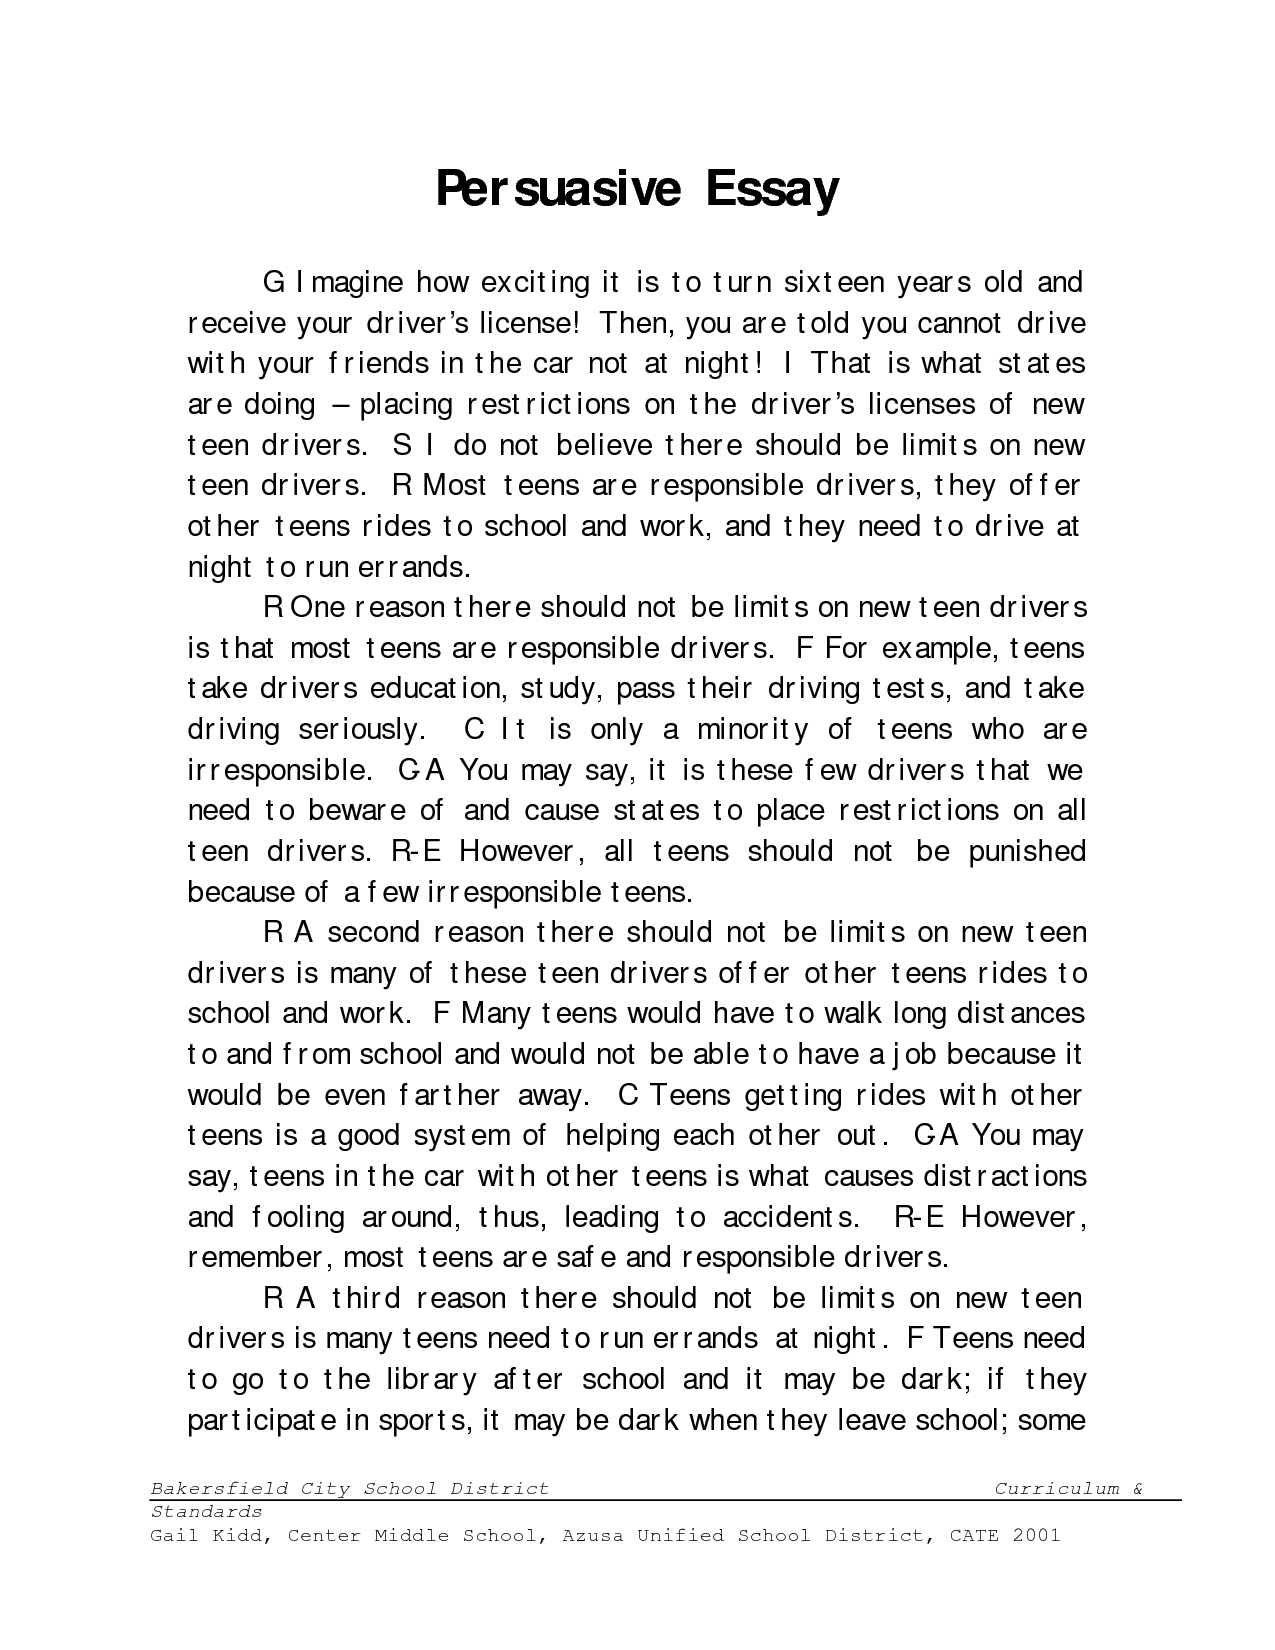 Persuasive essay about school